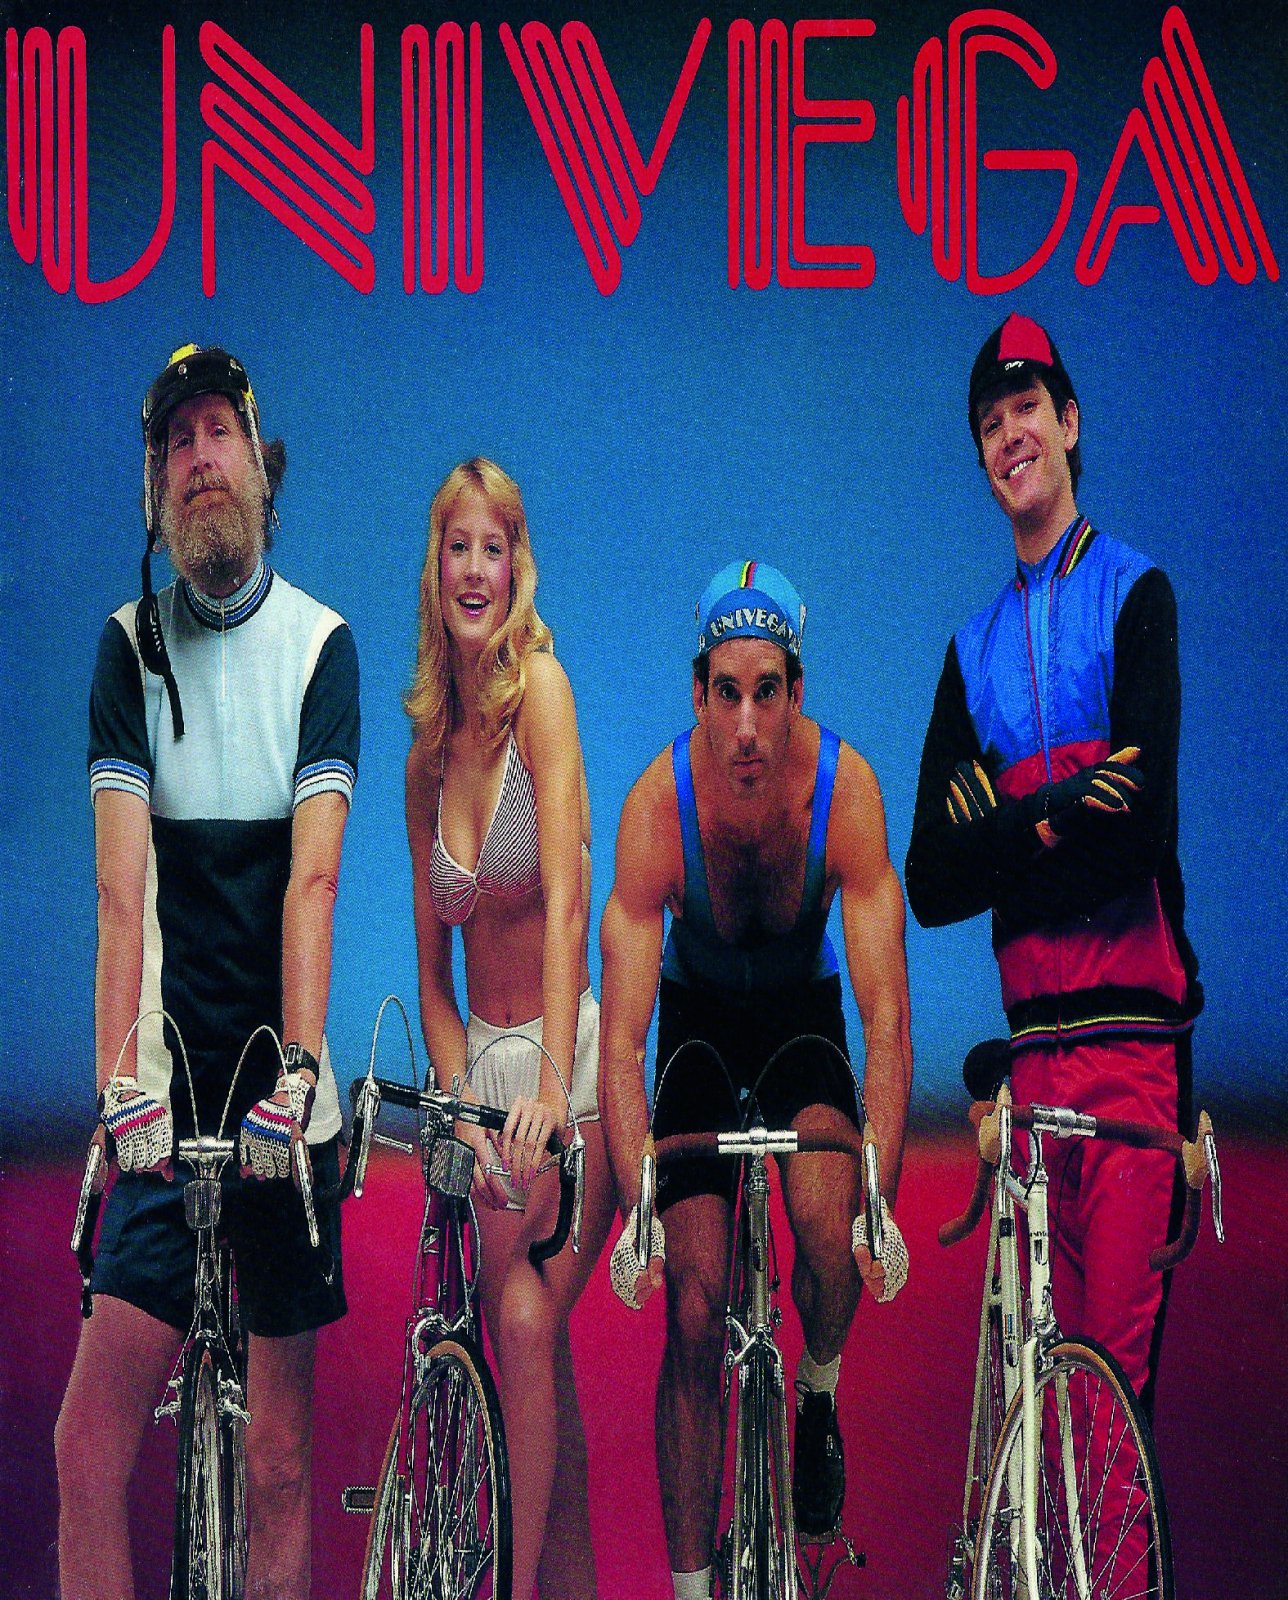 Univega-Katalog-1984-Titel.jpg